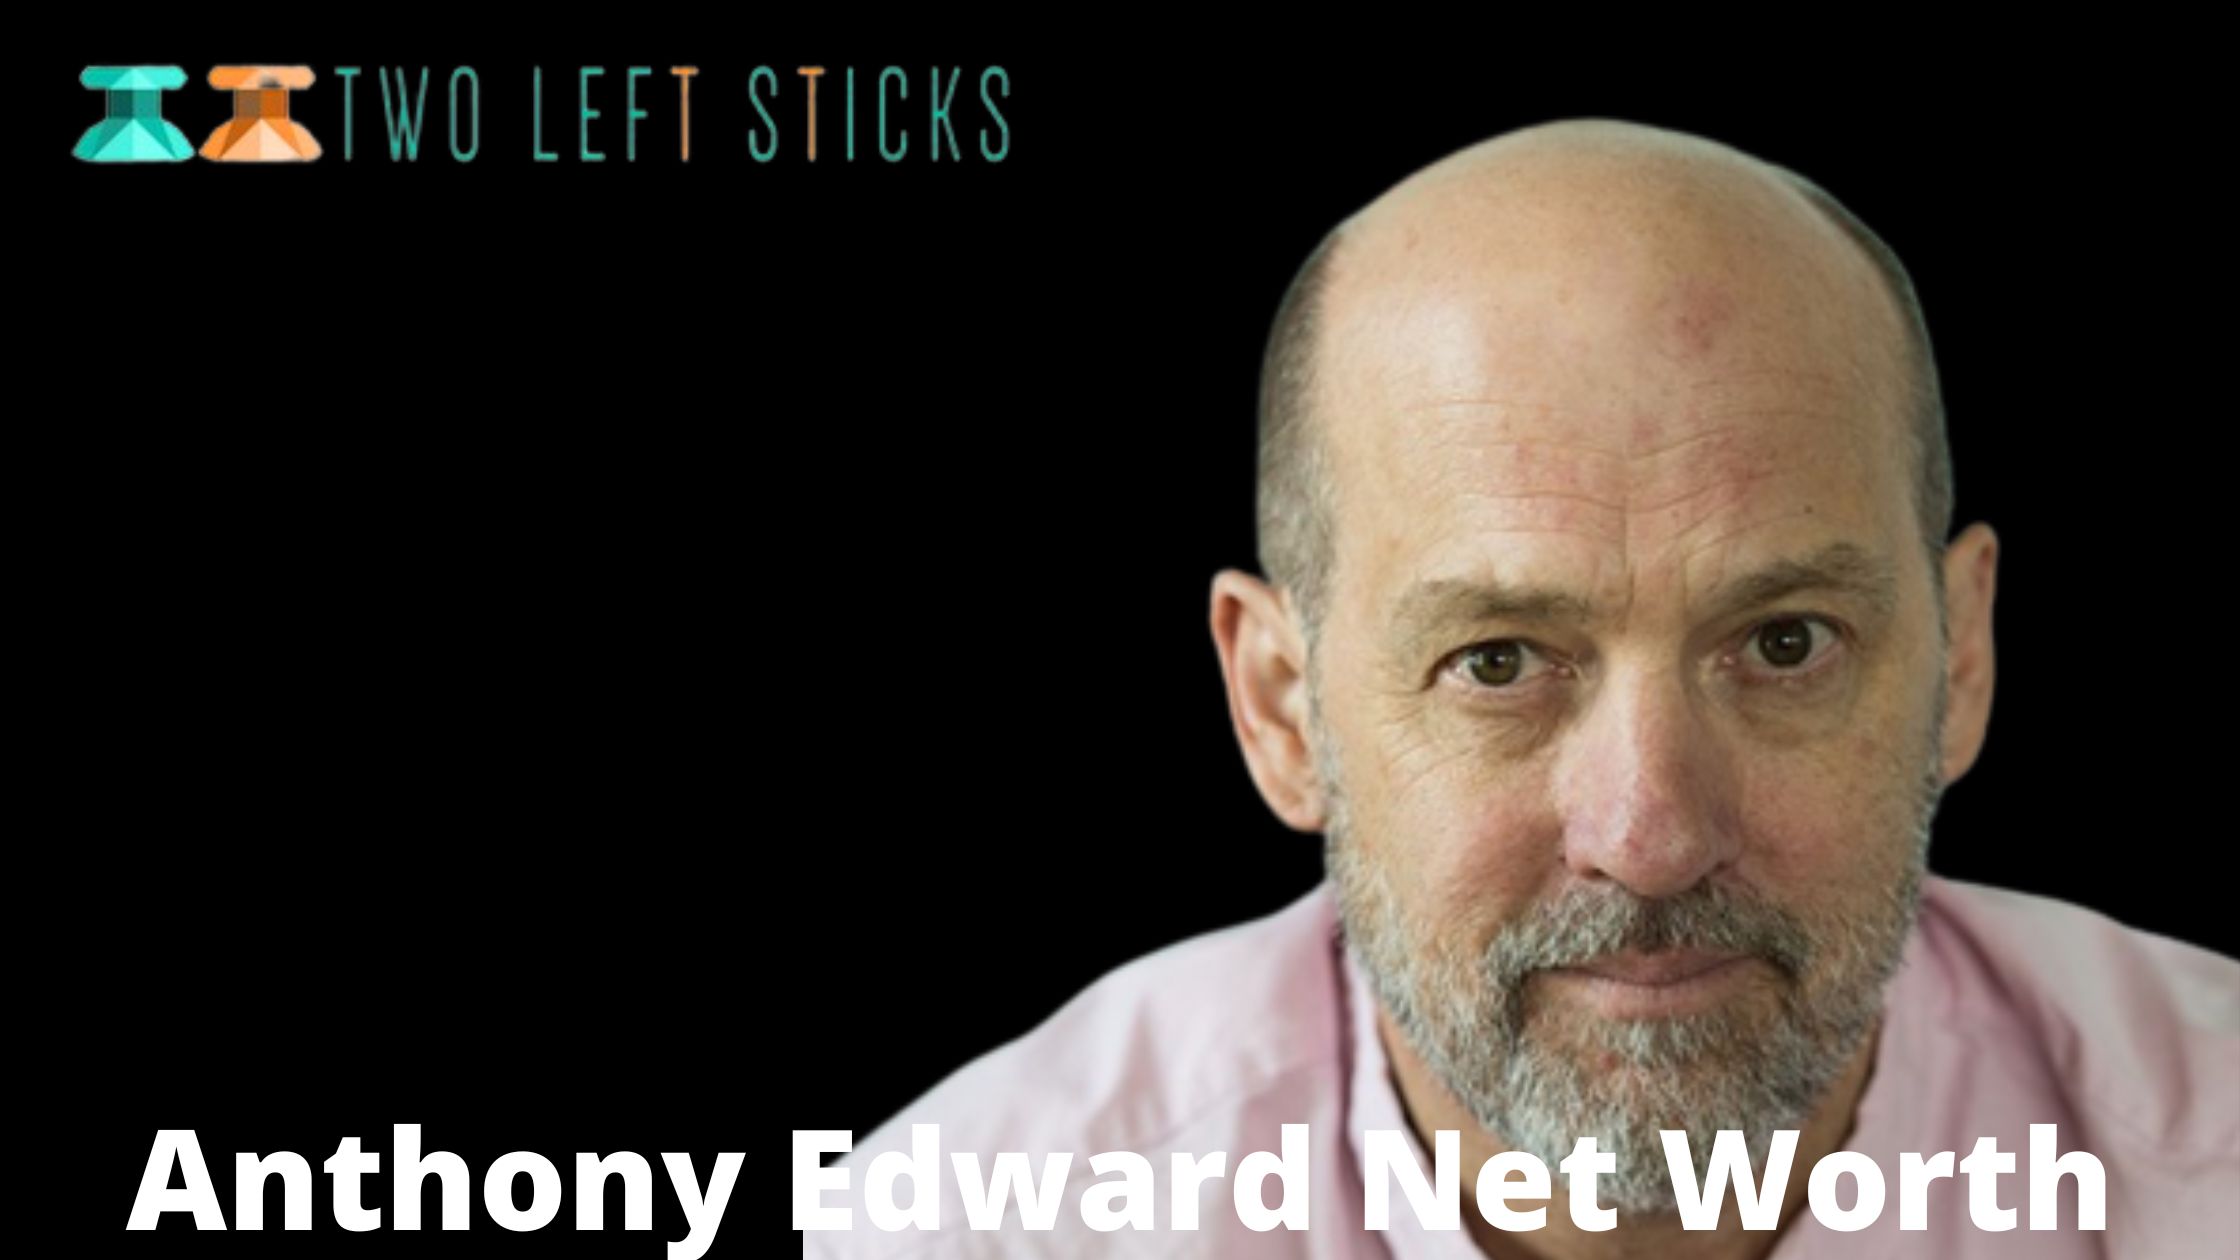 Anthony-edward-net-worth-twoleftsticks(1)